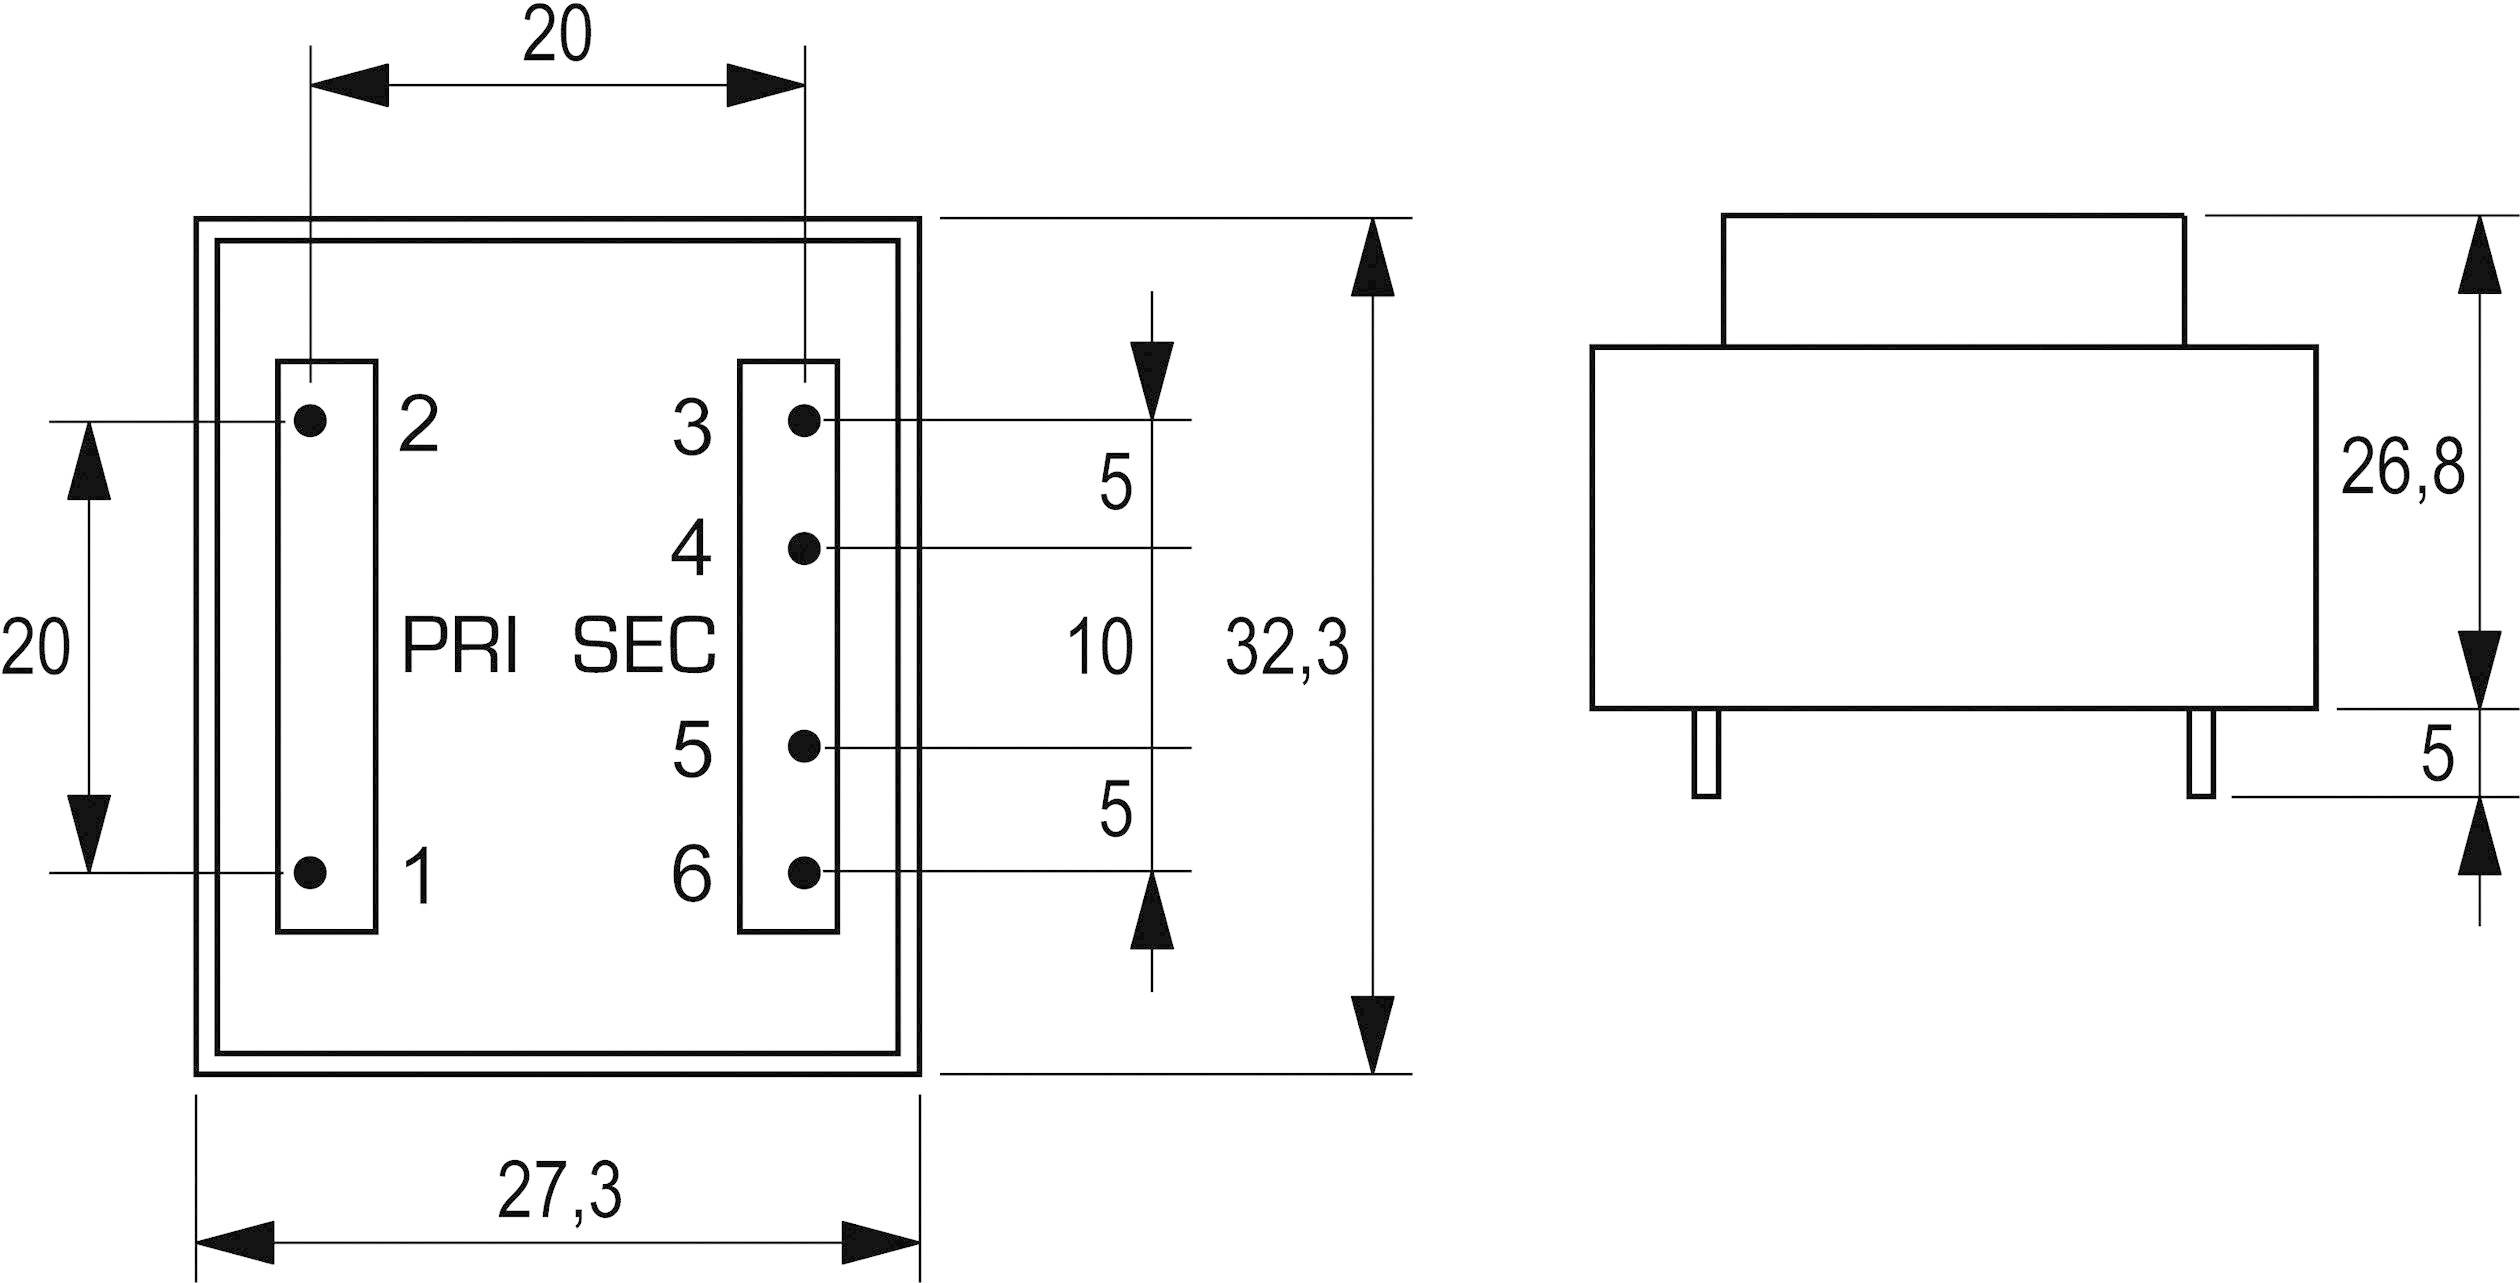 Block VB 1,2/1/12 Printtransformator 1 x 230 V 1 x 12 V/AC 1.20 VA 100 mA 